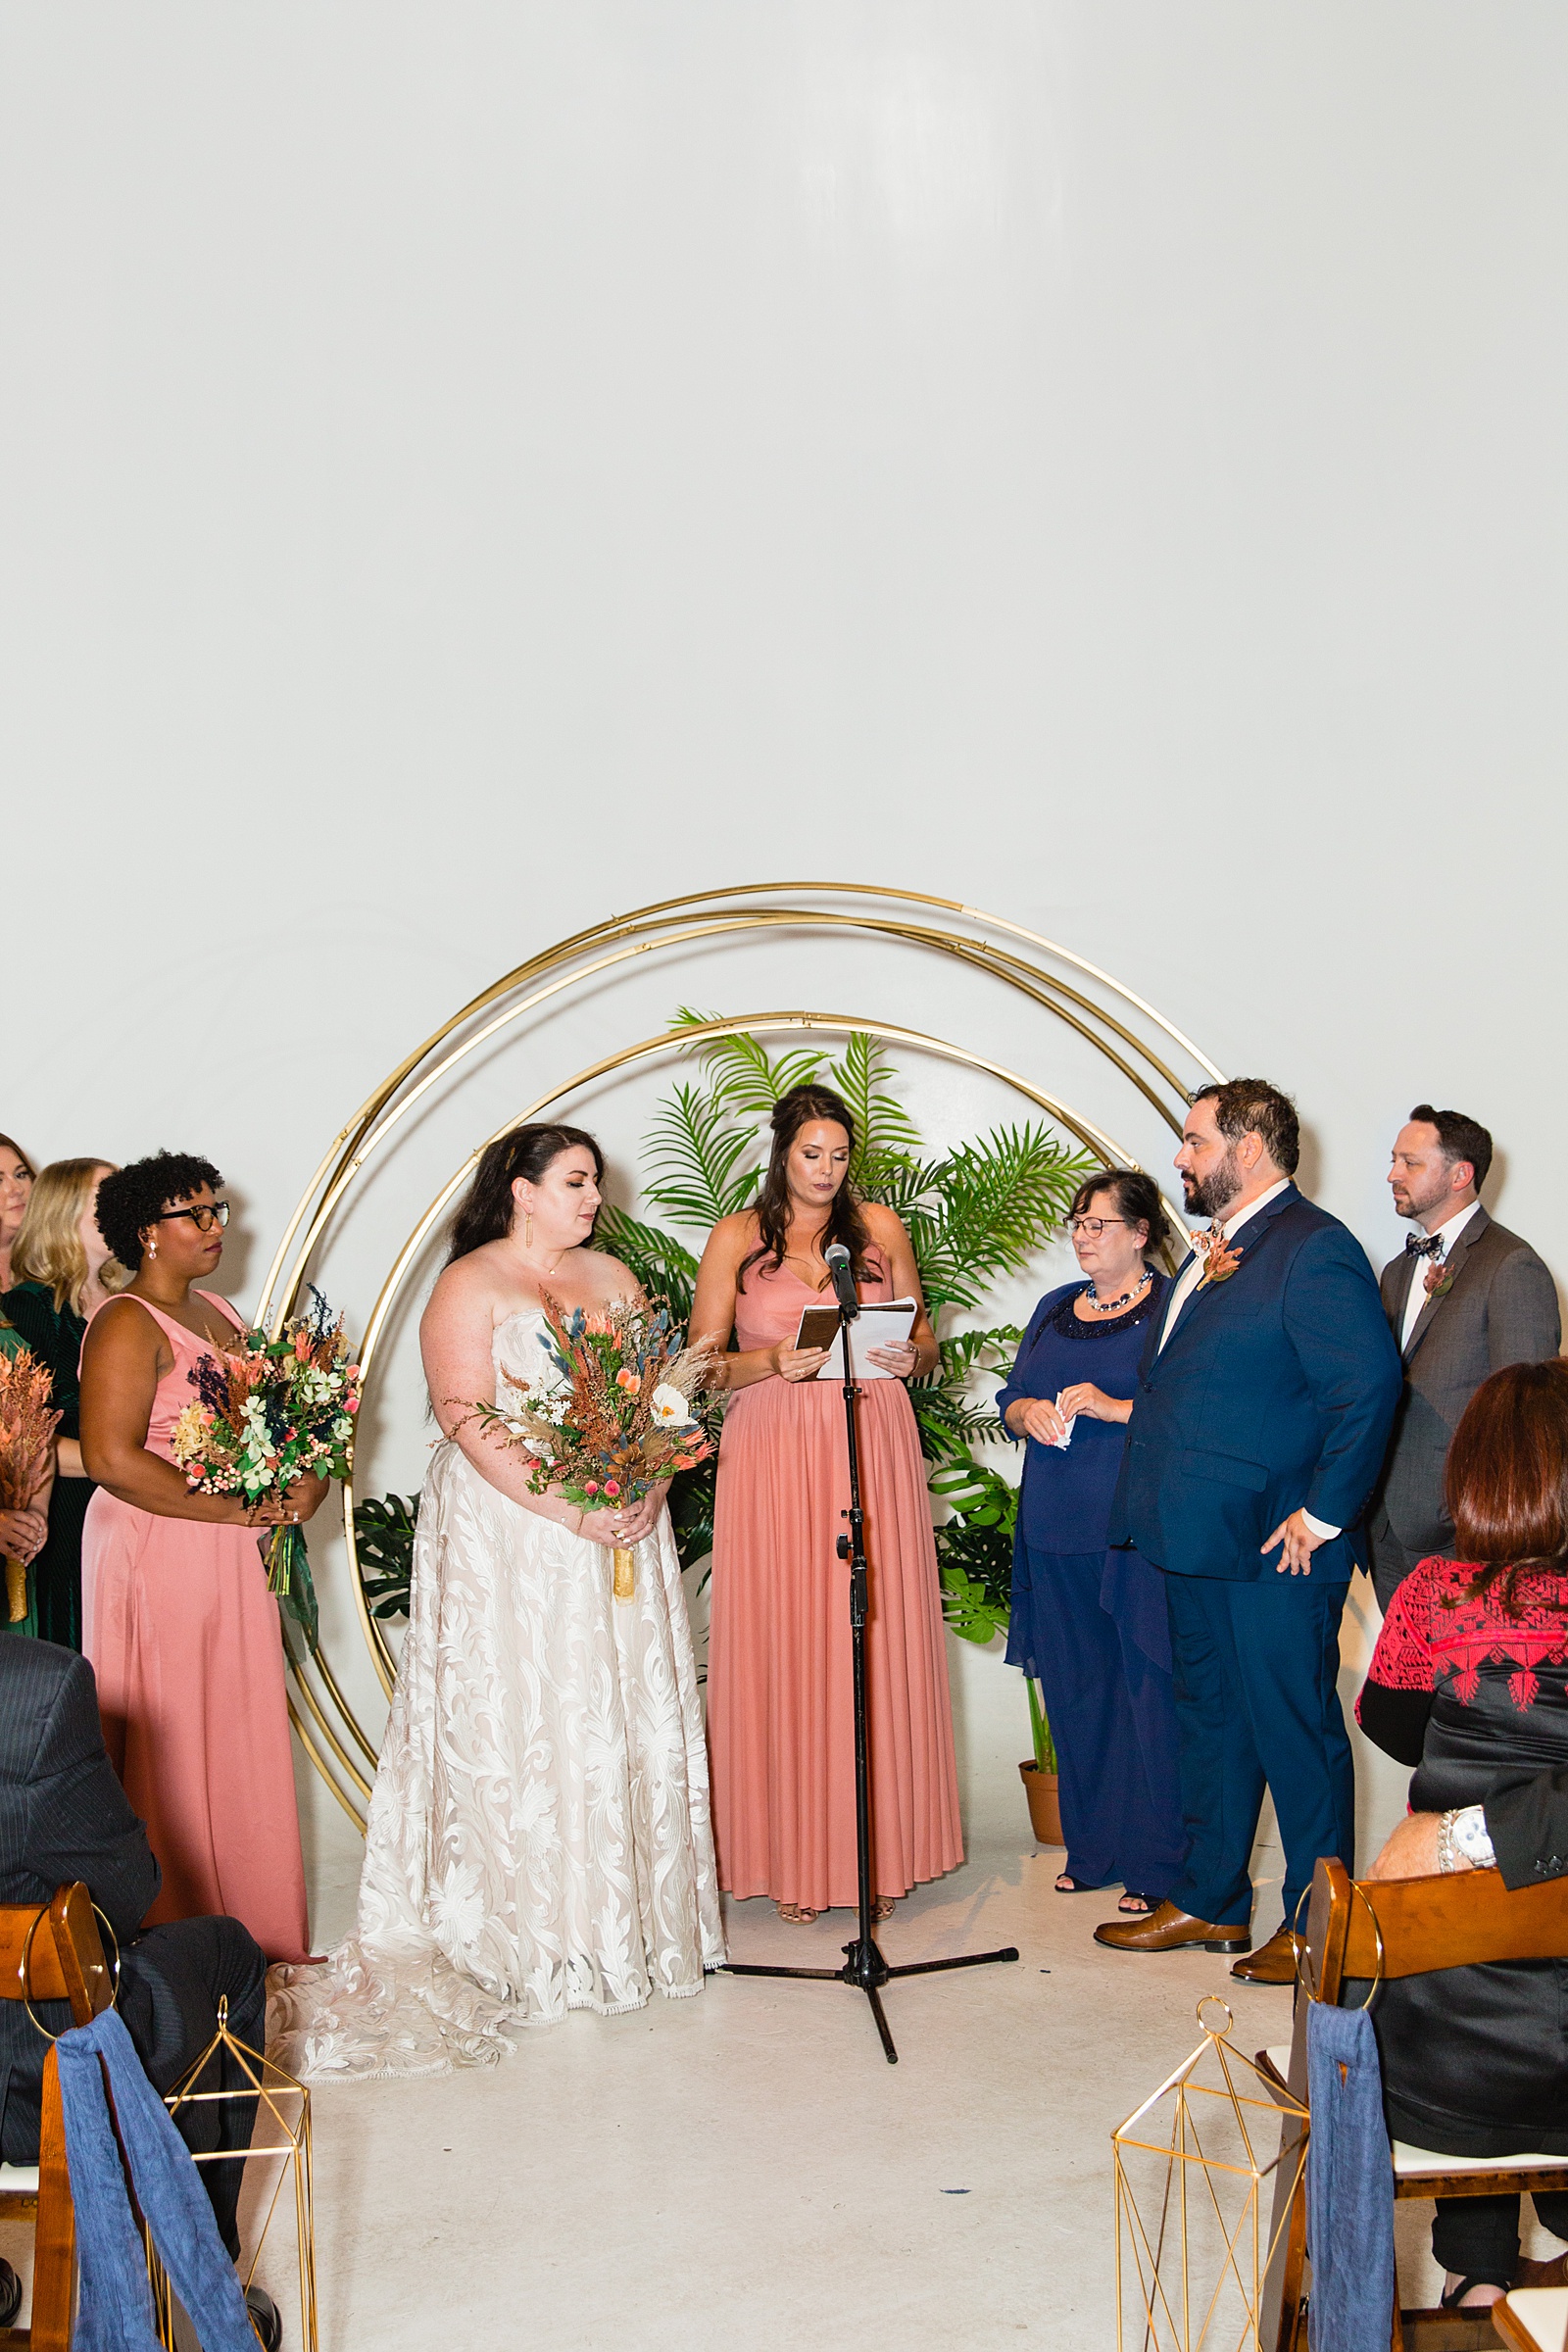 Wedding ceremony at MonOrchid by Phoenix wedding photographer PMA Photography.